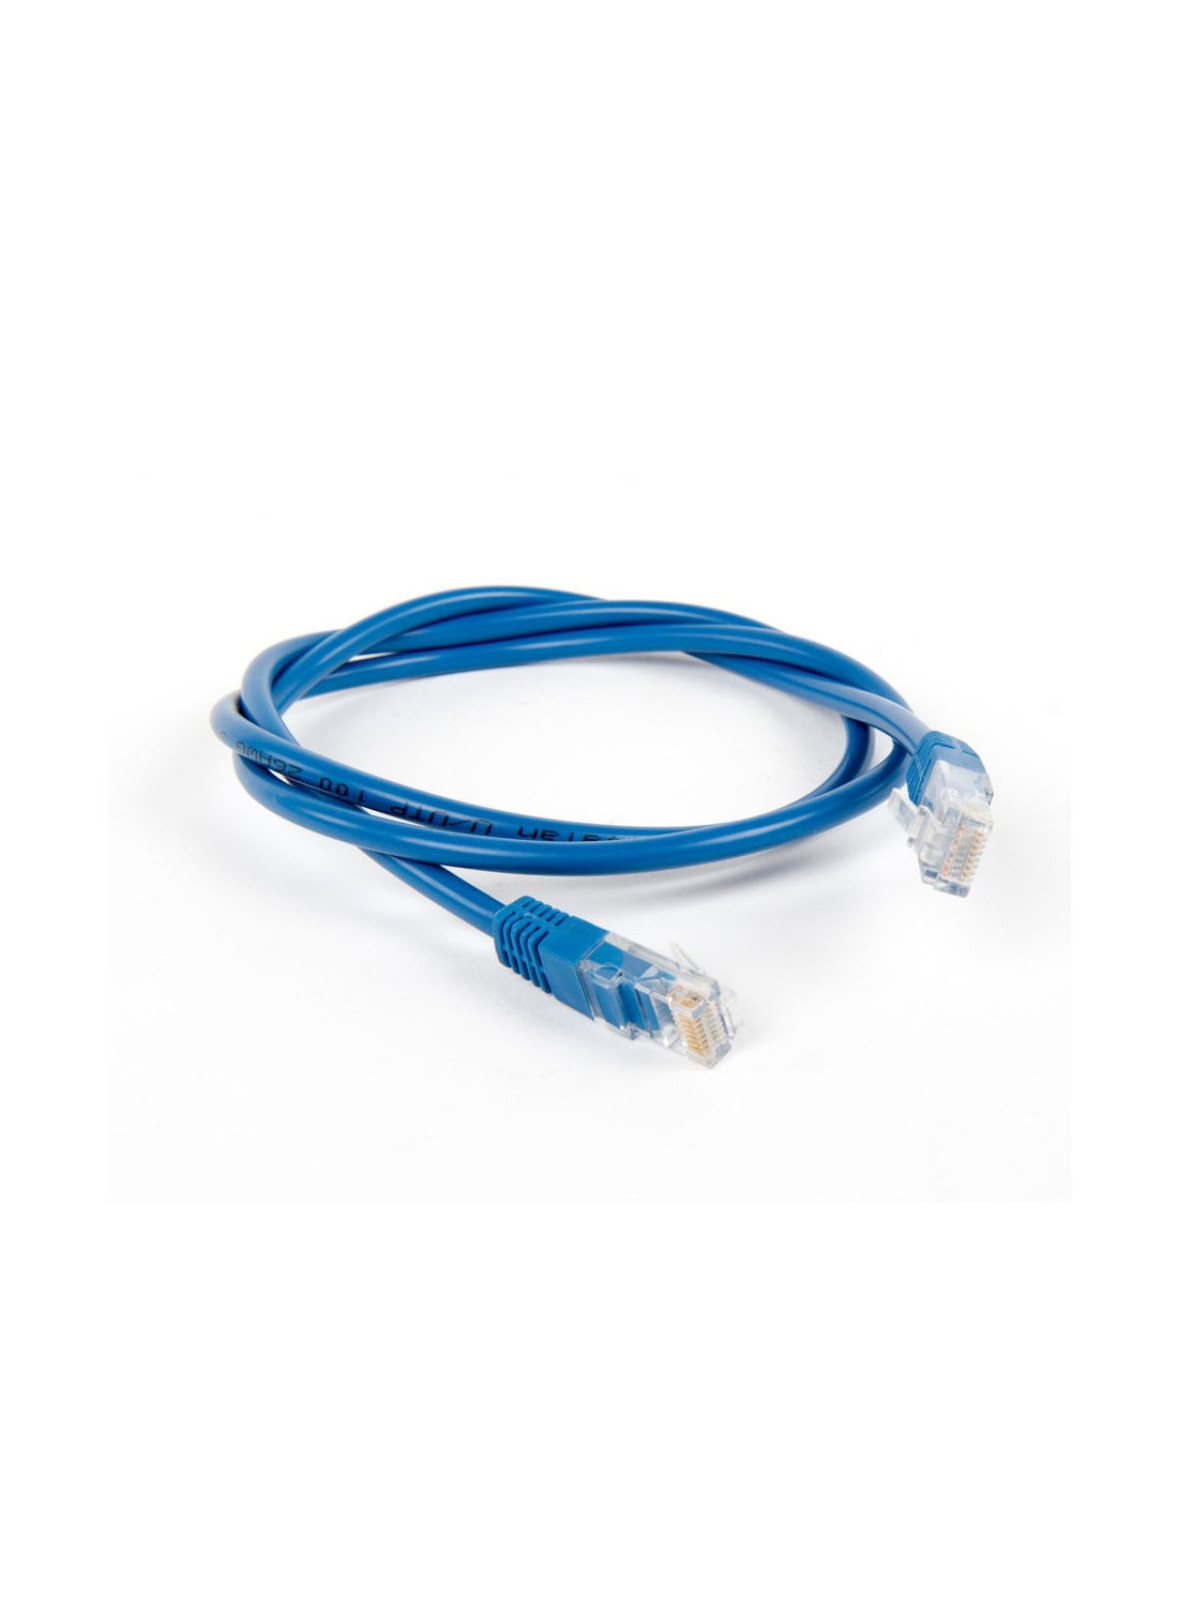 Victron UTP RJ45 cable - 1.8m